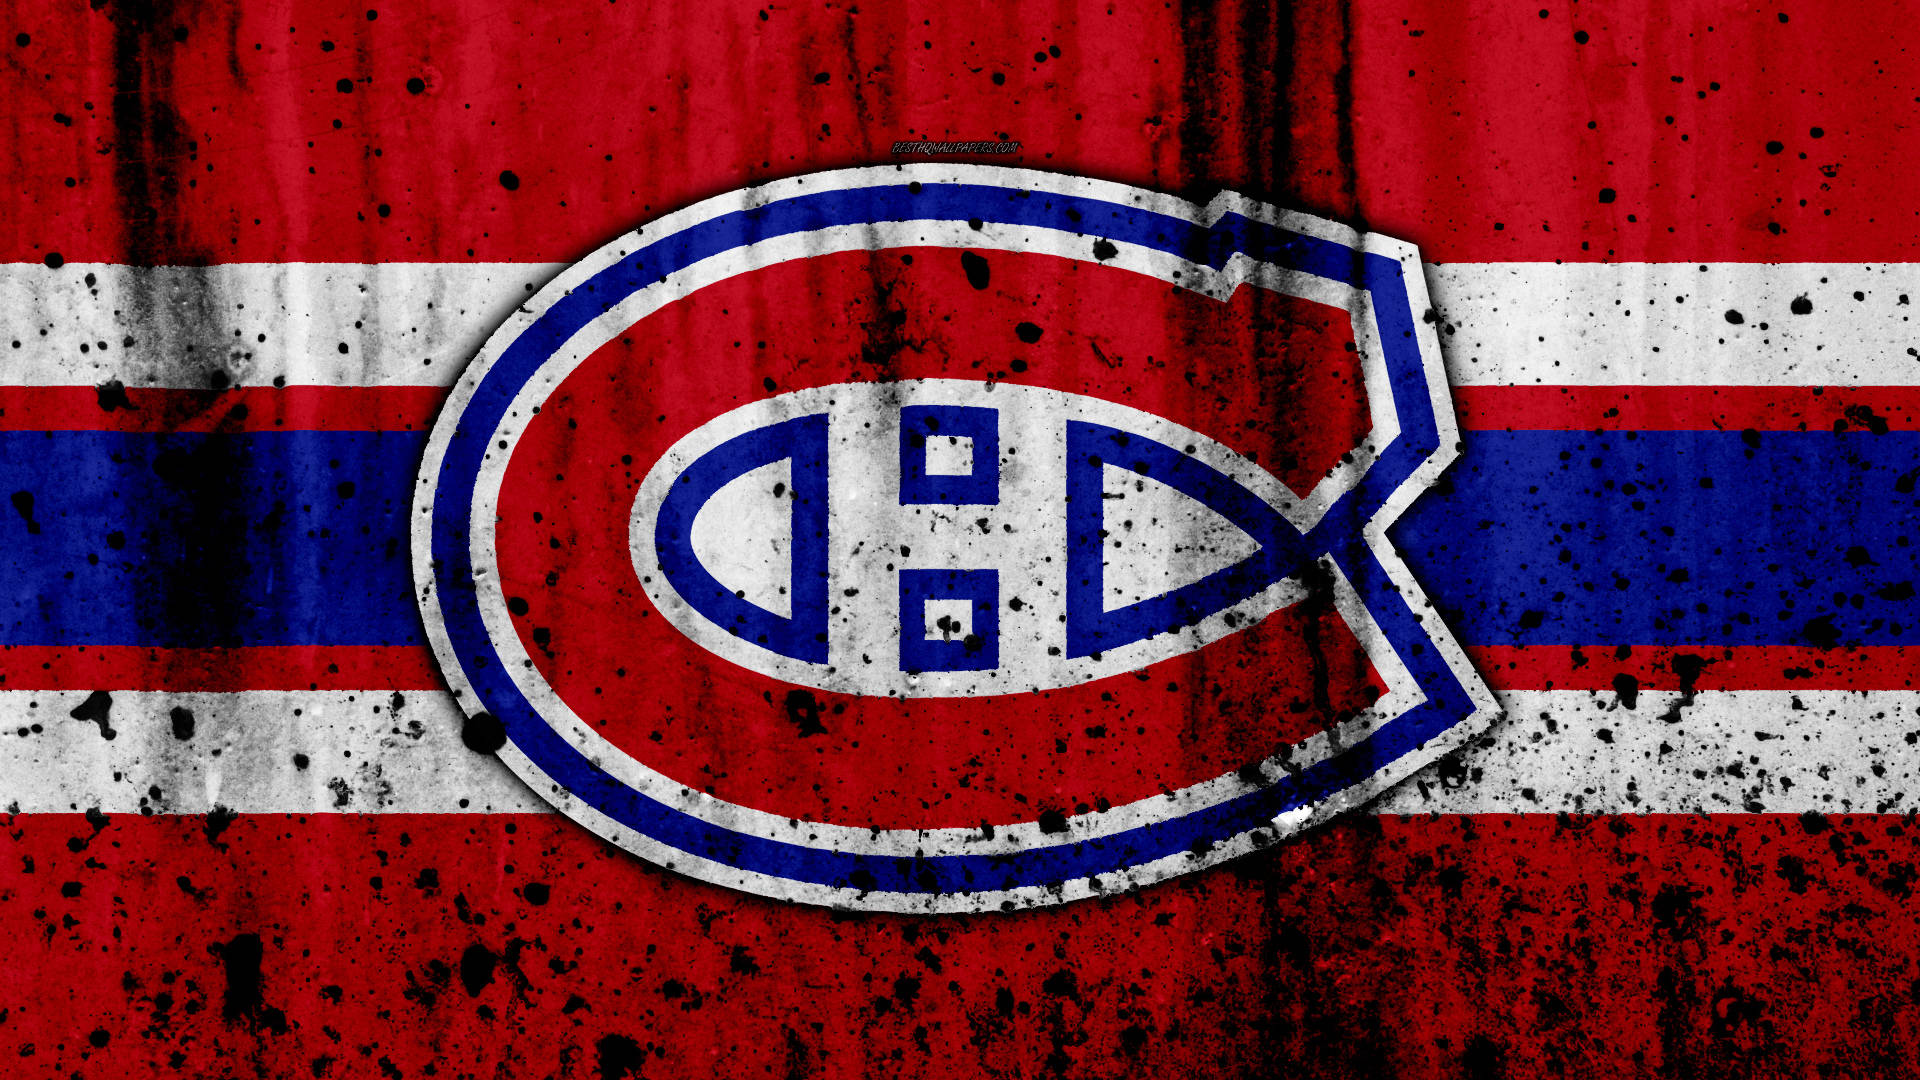 Montrealcanadiens Sport Team - Montreal Canadiens Sportlag Wallpaper